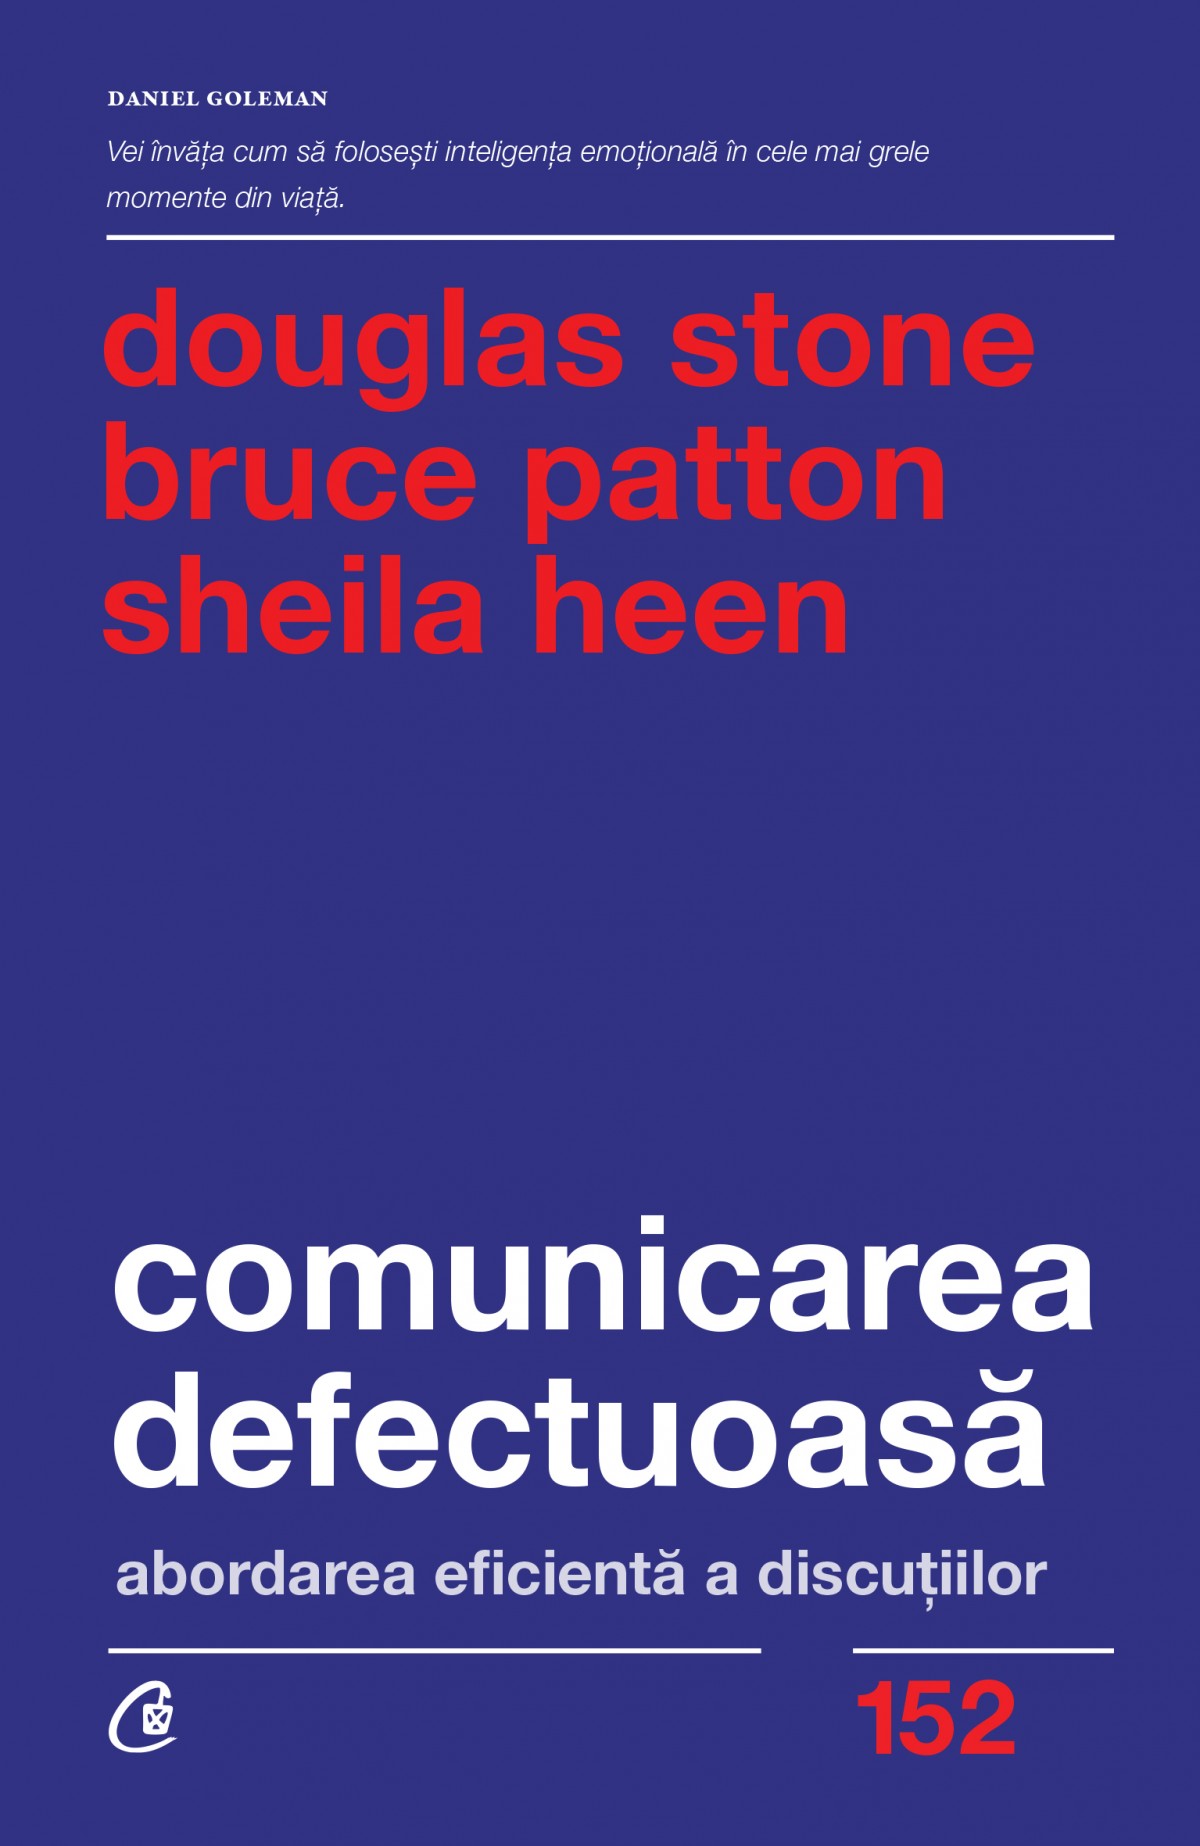 Comunicarea defectuoasa | Sheila Heen, Douglas Stone, Bruce Patton Bruce